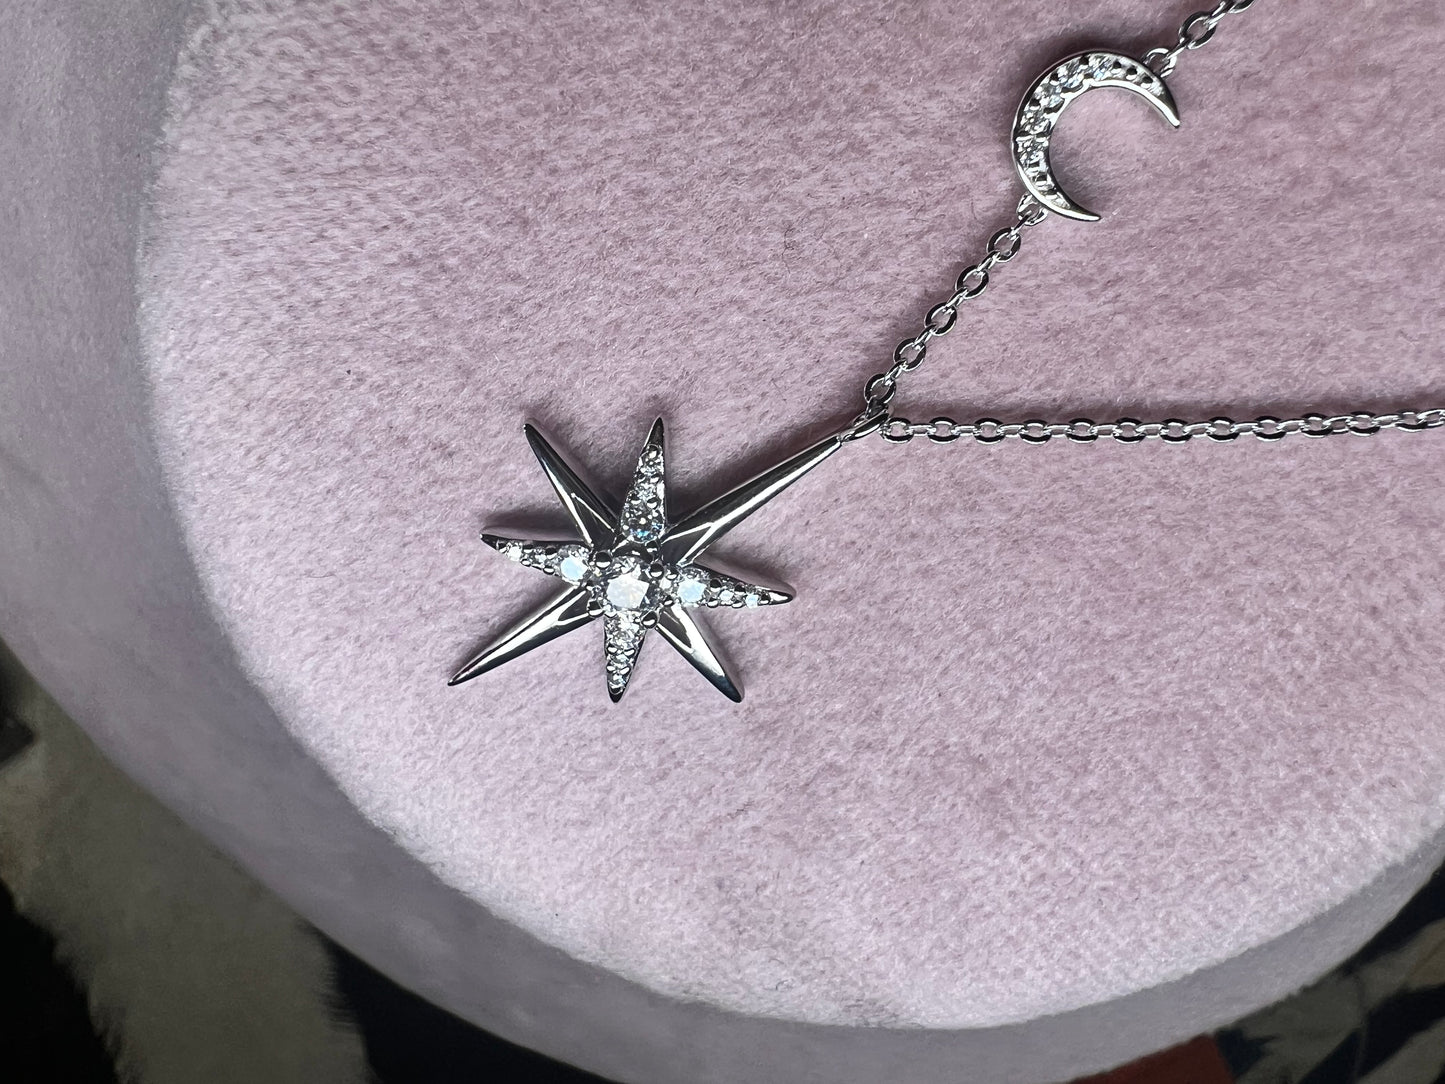 Moissanite Star Necklace